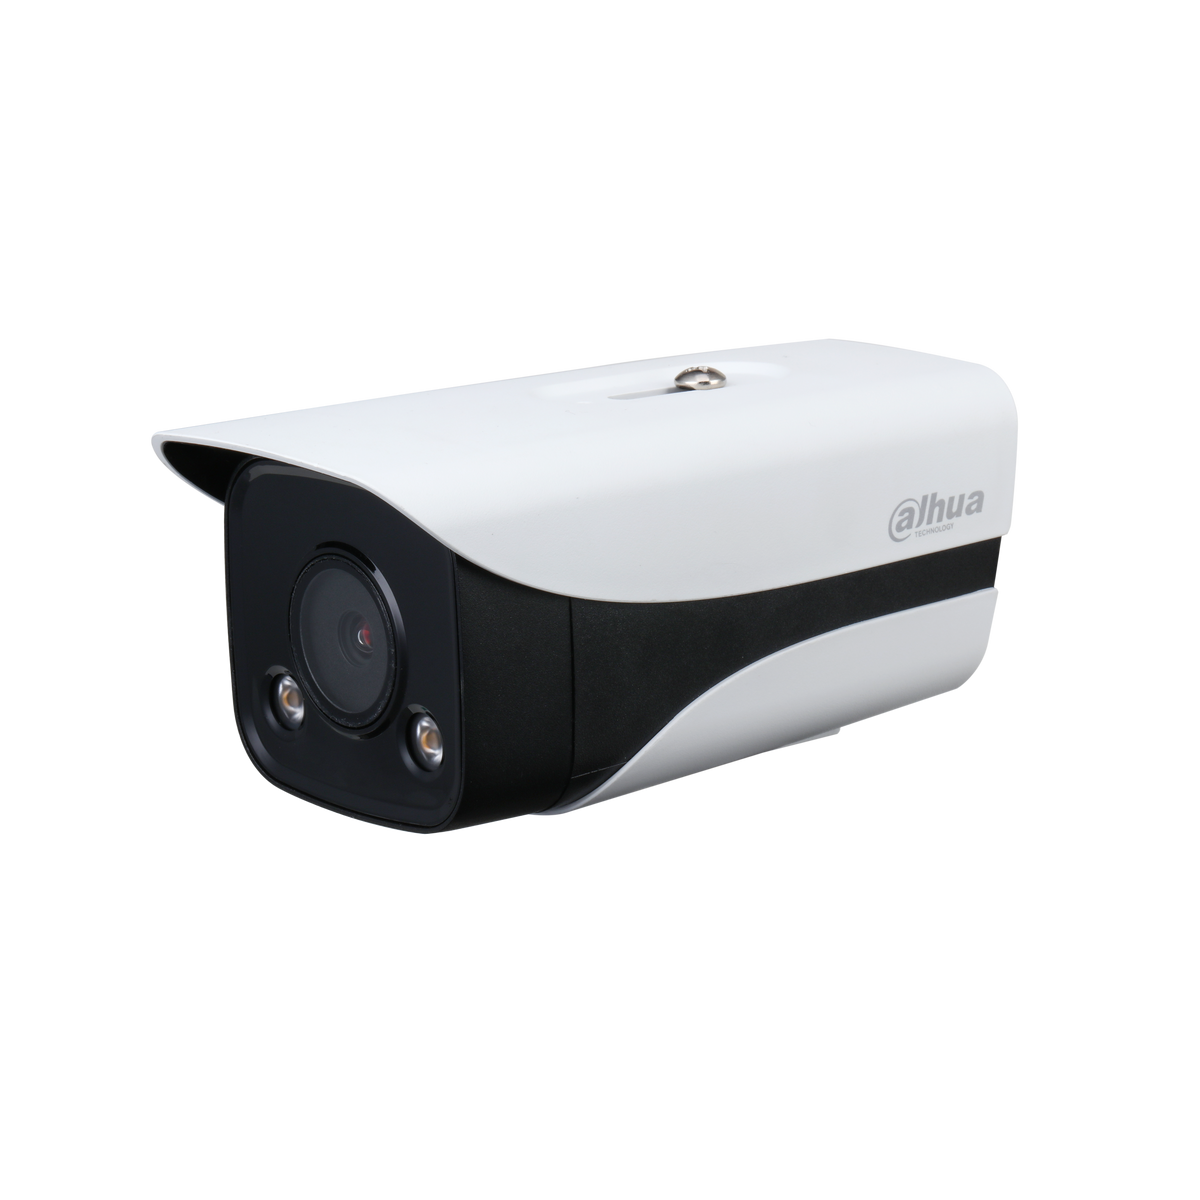 DAHUA IPC-HFW2230M-AS-LED 2MP Lite Full-color Fixed-focal Bullet Network Camera